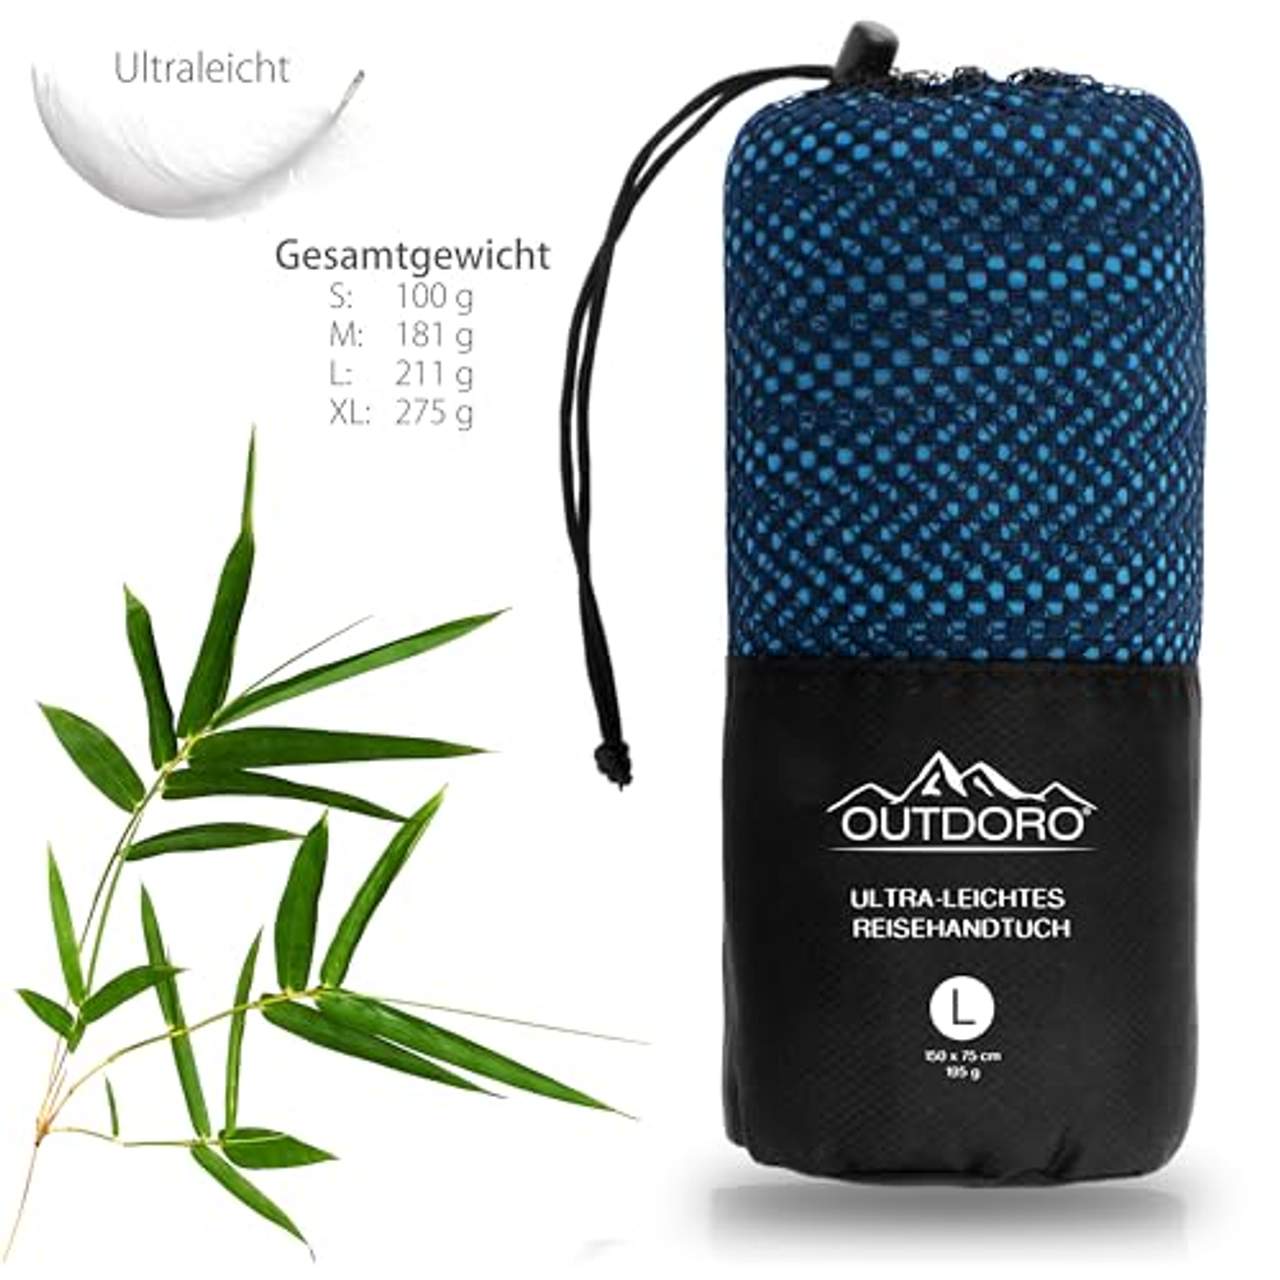 Outdoro Reisehandtuch mit Bambus Kohle Ultra-leicht & saugfähig